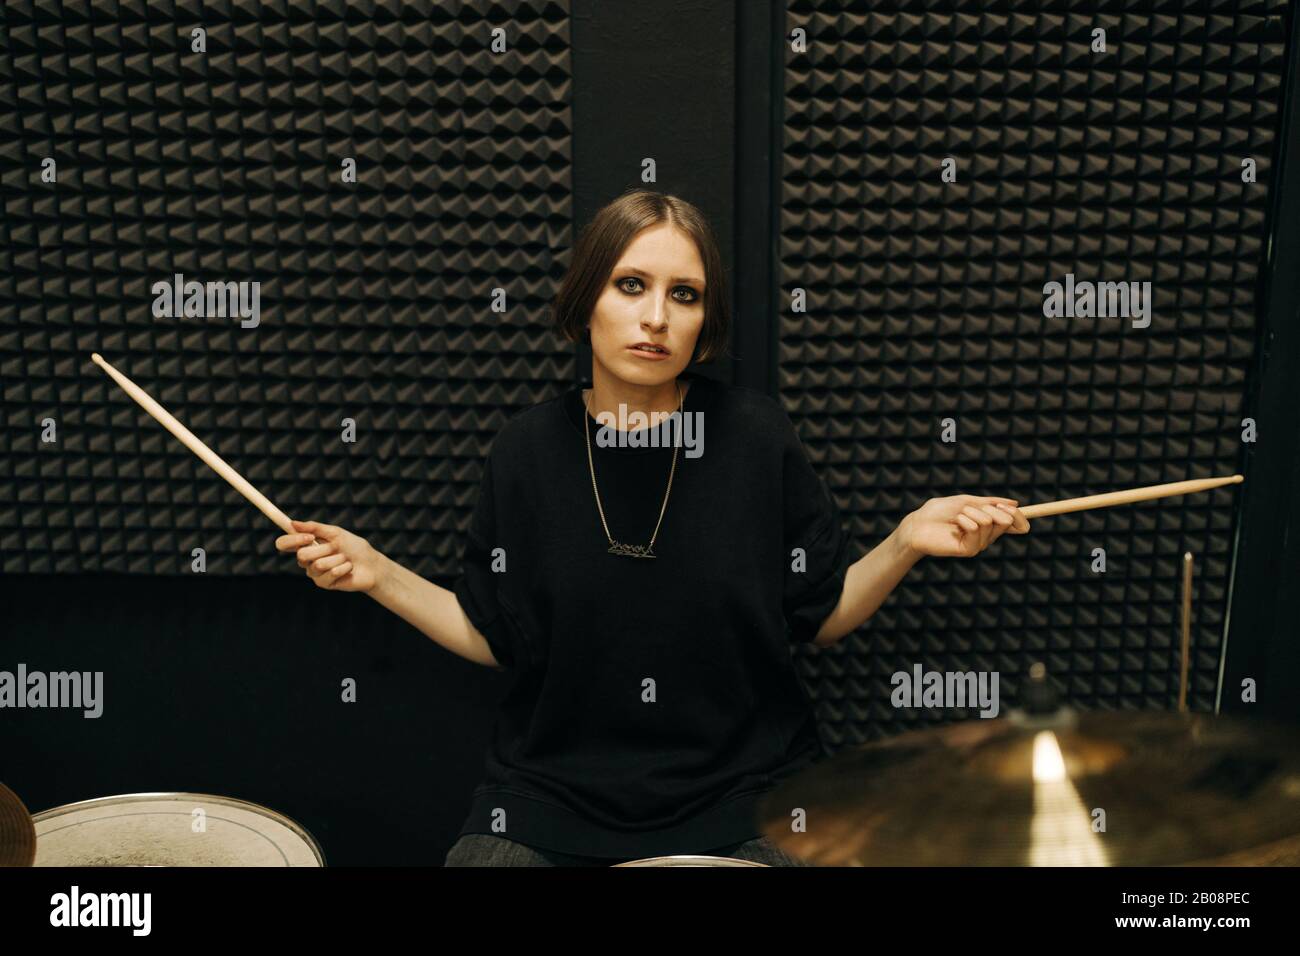 Junge Frau, die Schlagzeug spielt, selektiver Fokus Stockfoto